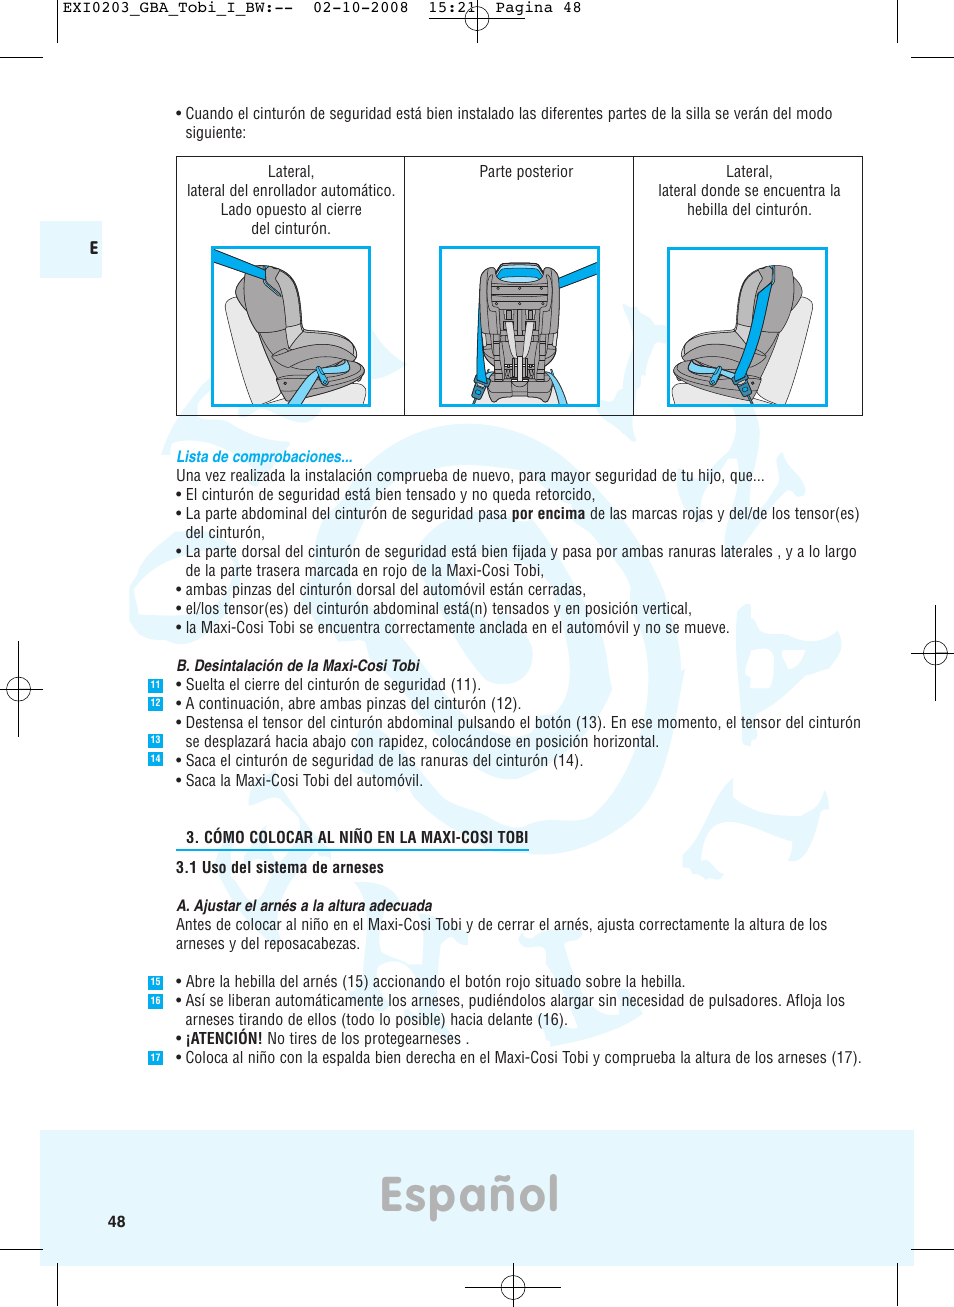 Español | Maxi-Cosi TOBI DRU0632 User Manual | Page 44 / 74 | Original mode